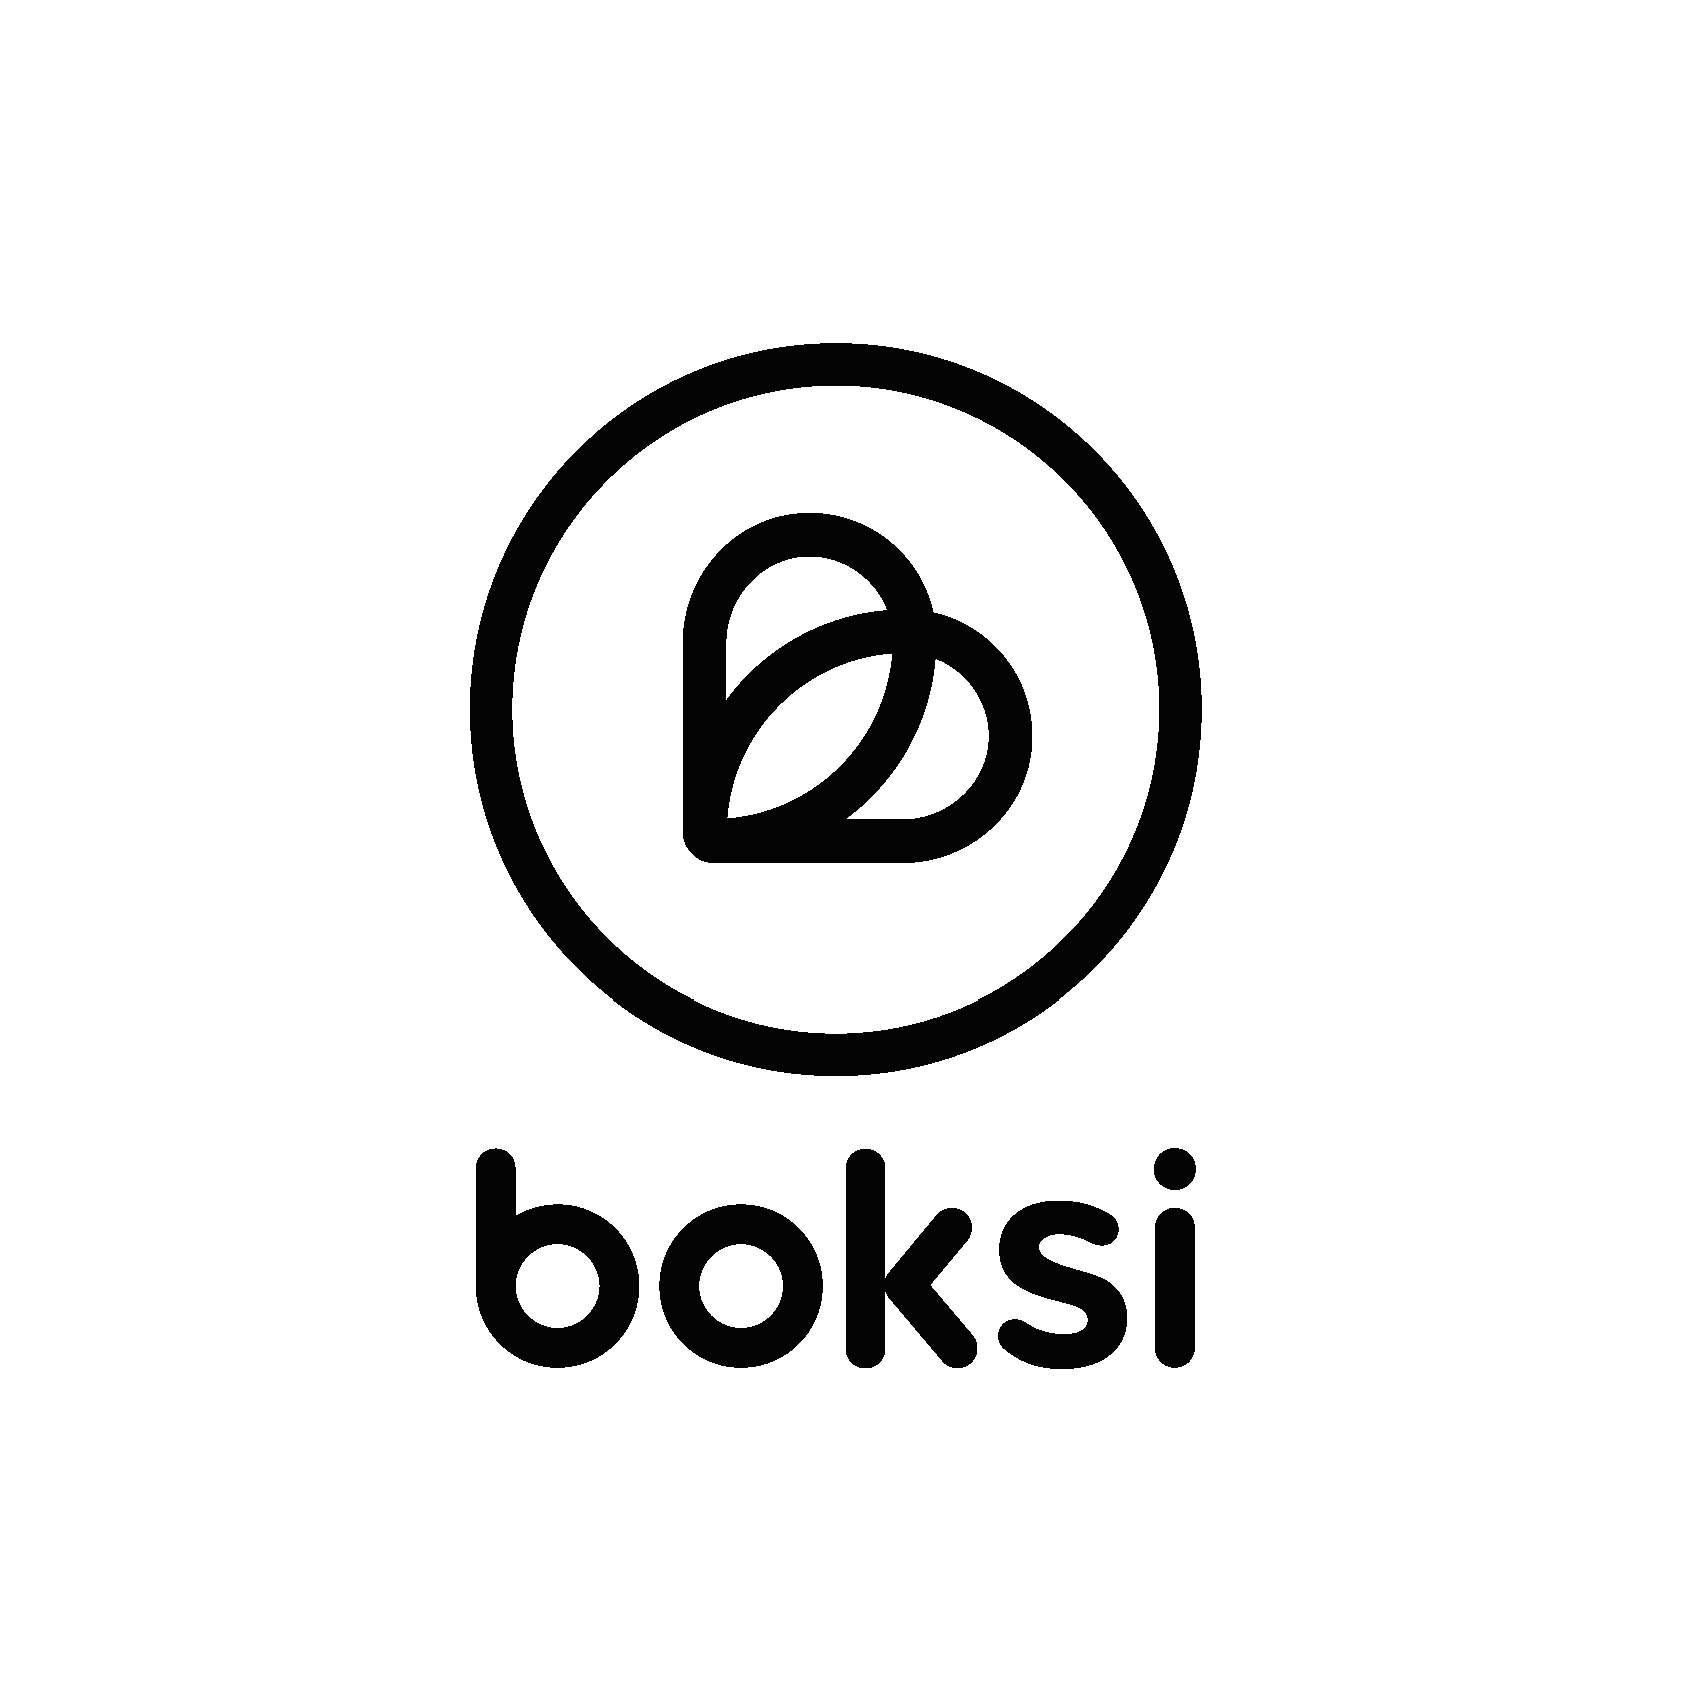 boksi-logo-2-center-.png (72 KB)